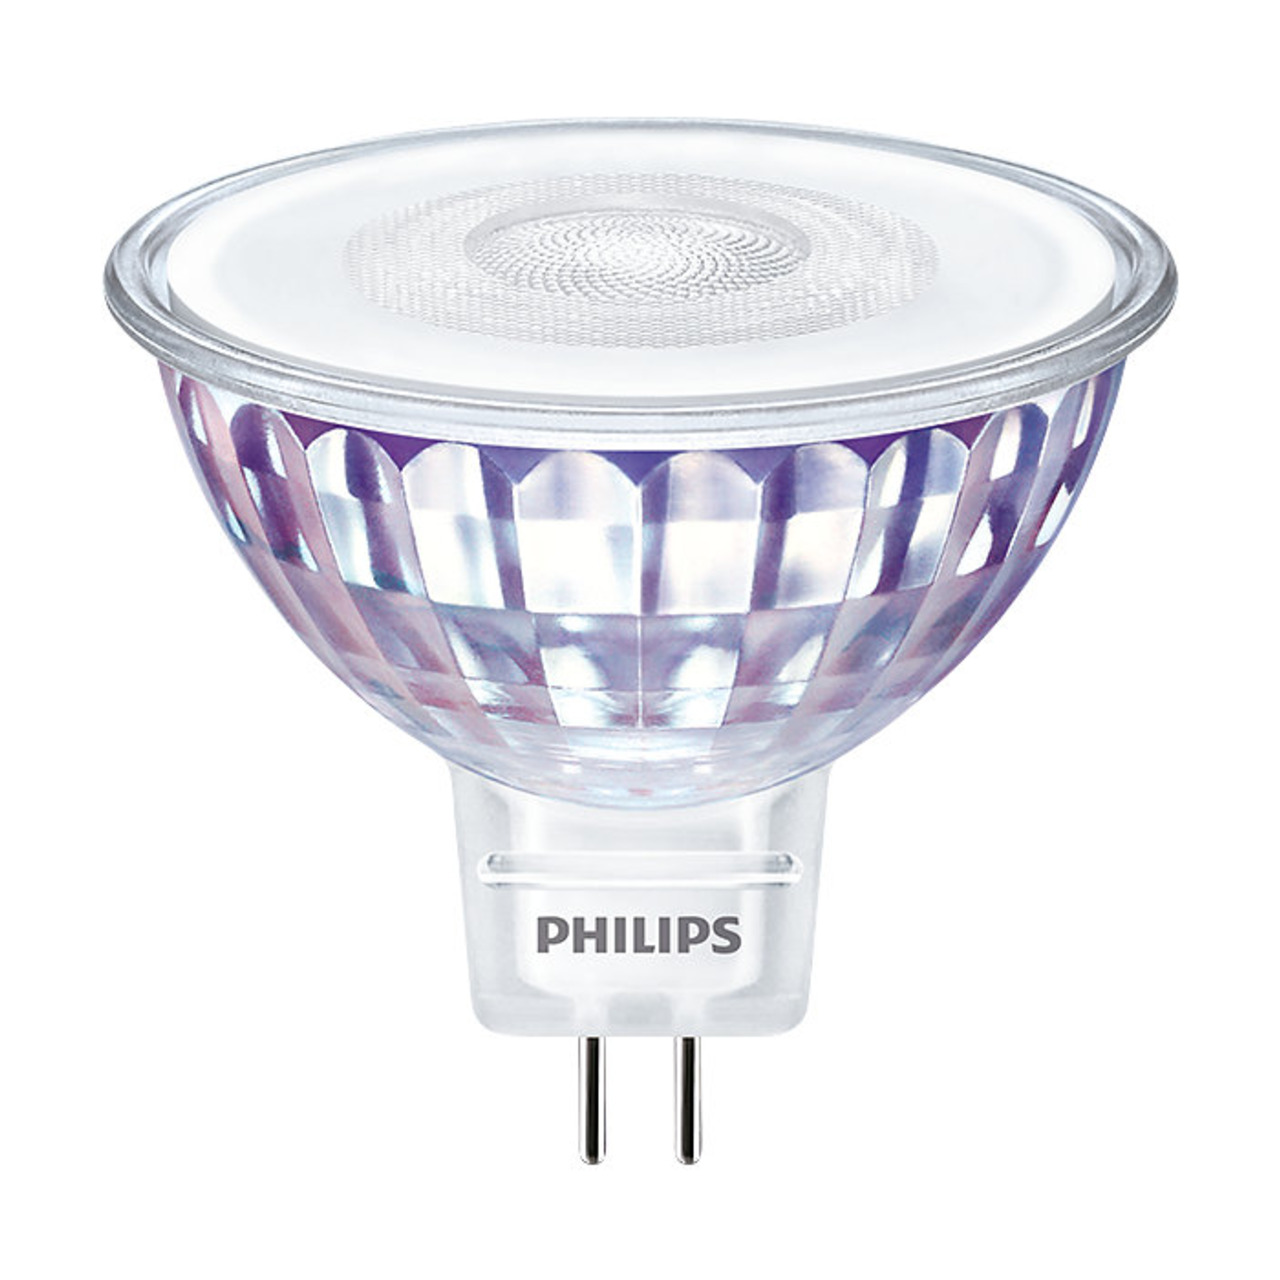 Philips 7-5-W-GU5-3-LED-Lampe Master LEDspot Value- MR16- 621 lm- warmweiss (2700 K)- 60- dimmbar